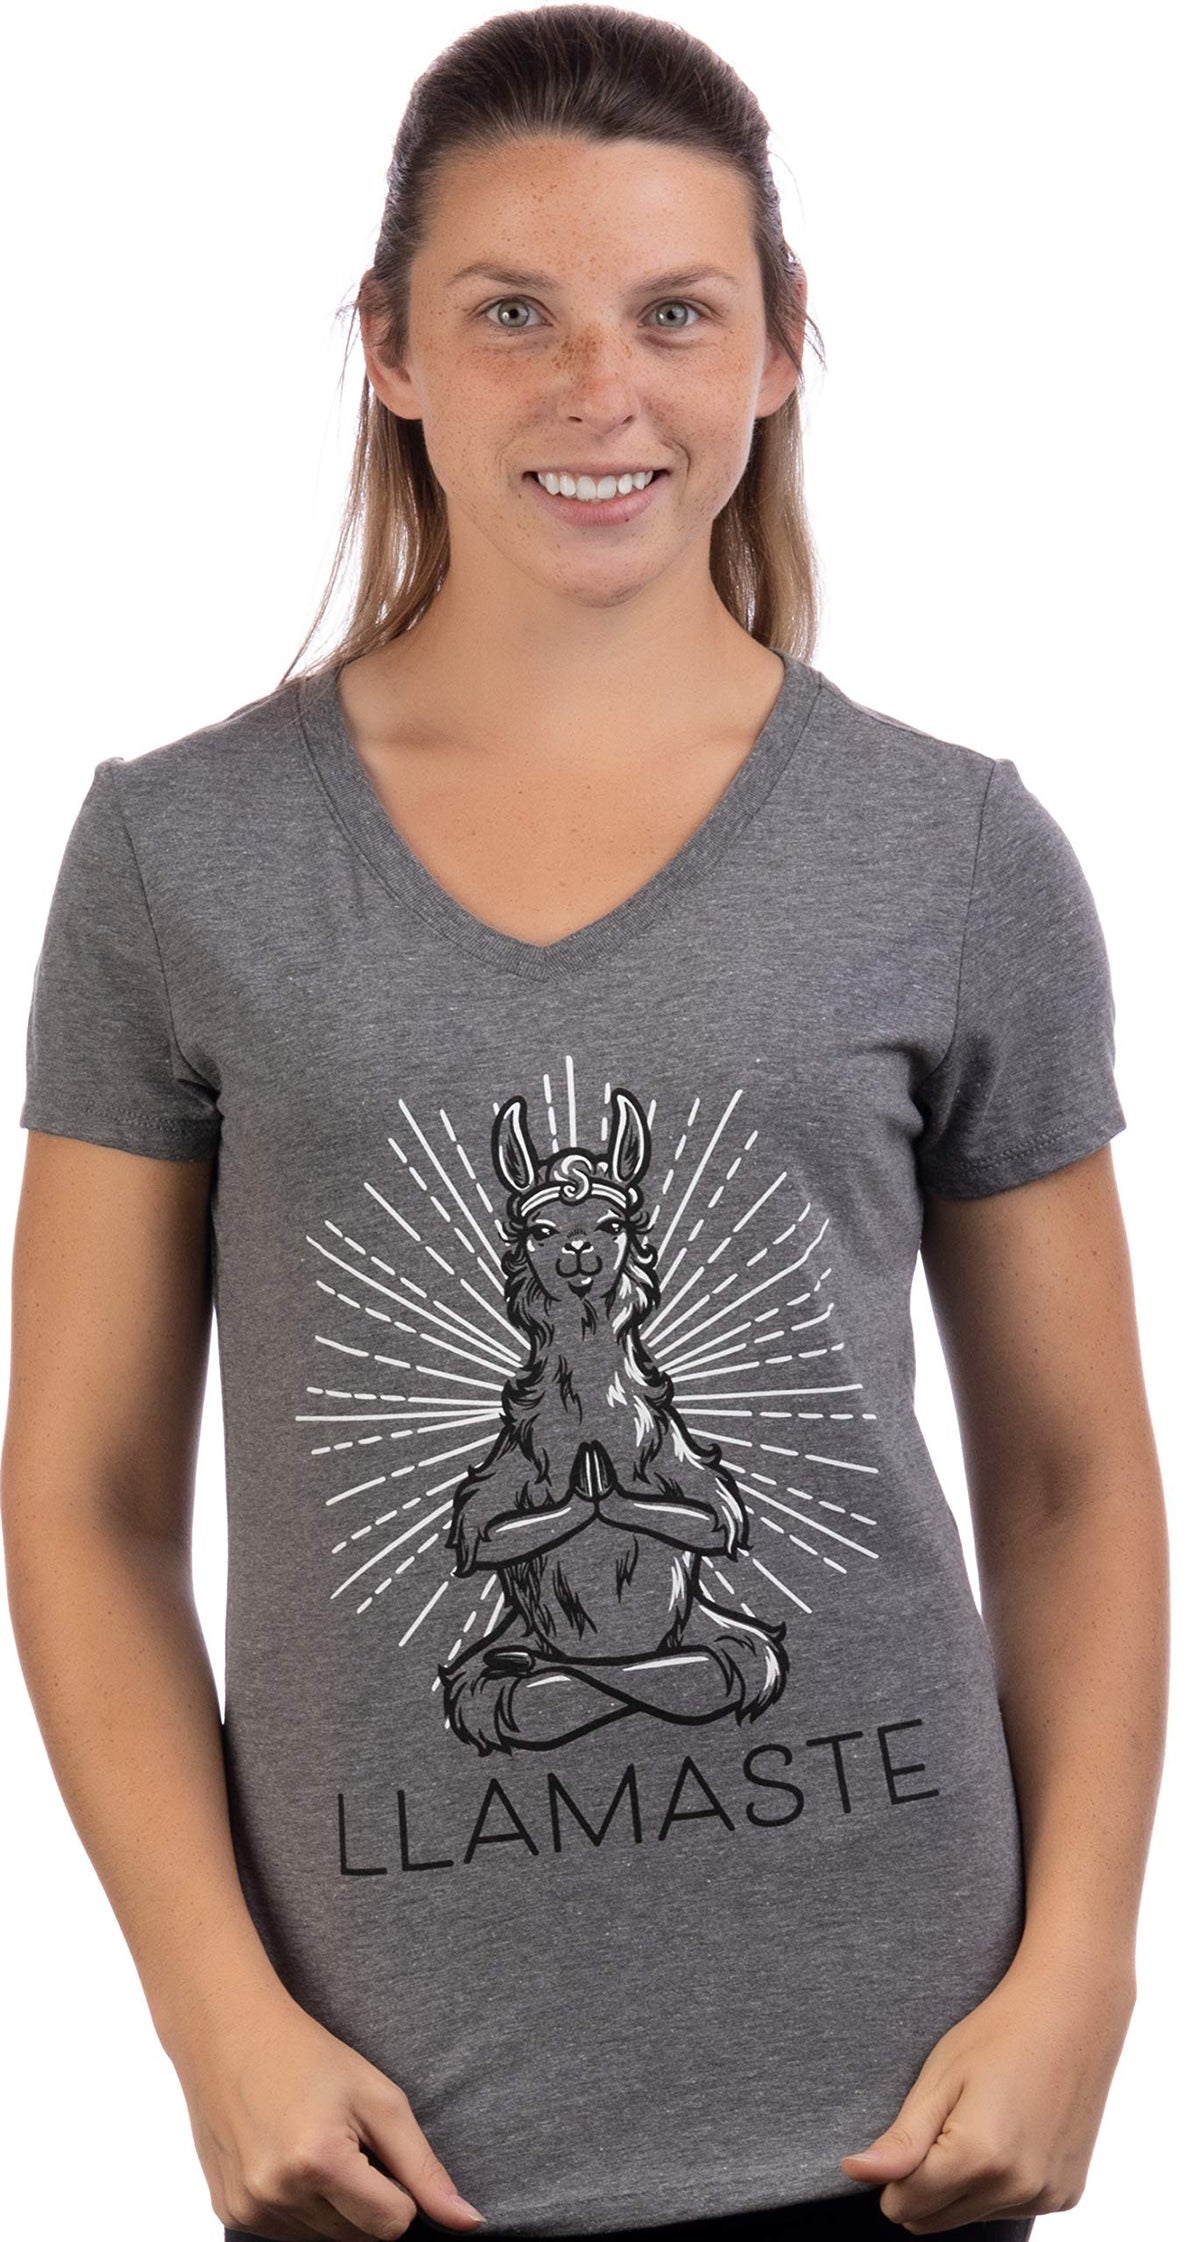 Llamaste | Cute, Funny Yoga Llama Namaste Workout V-neck T-shirt Top for Women